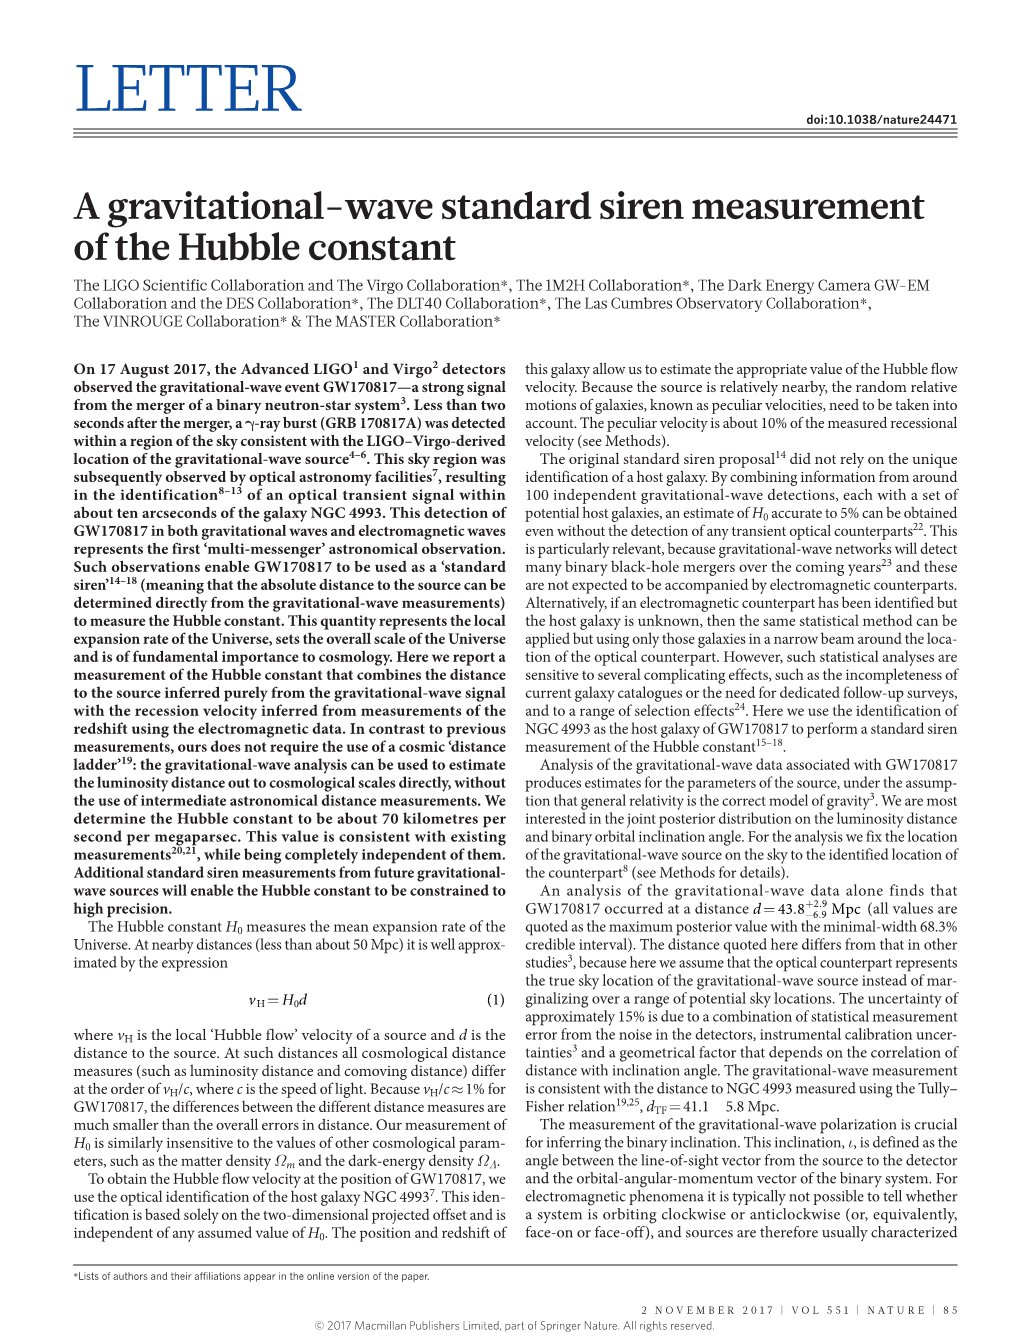 A Gravitational-Wave Standard Siren Measurement of the Hubble Constant